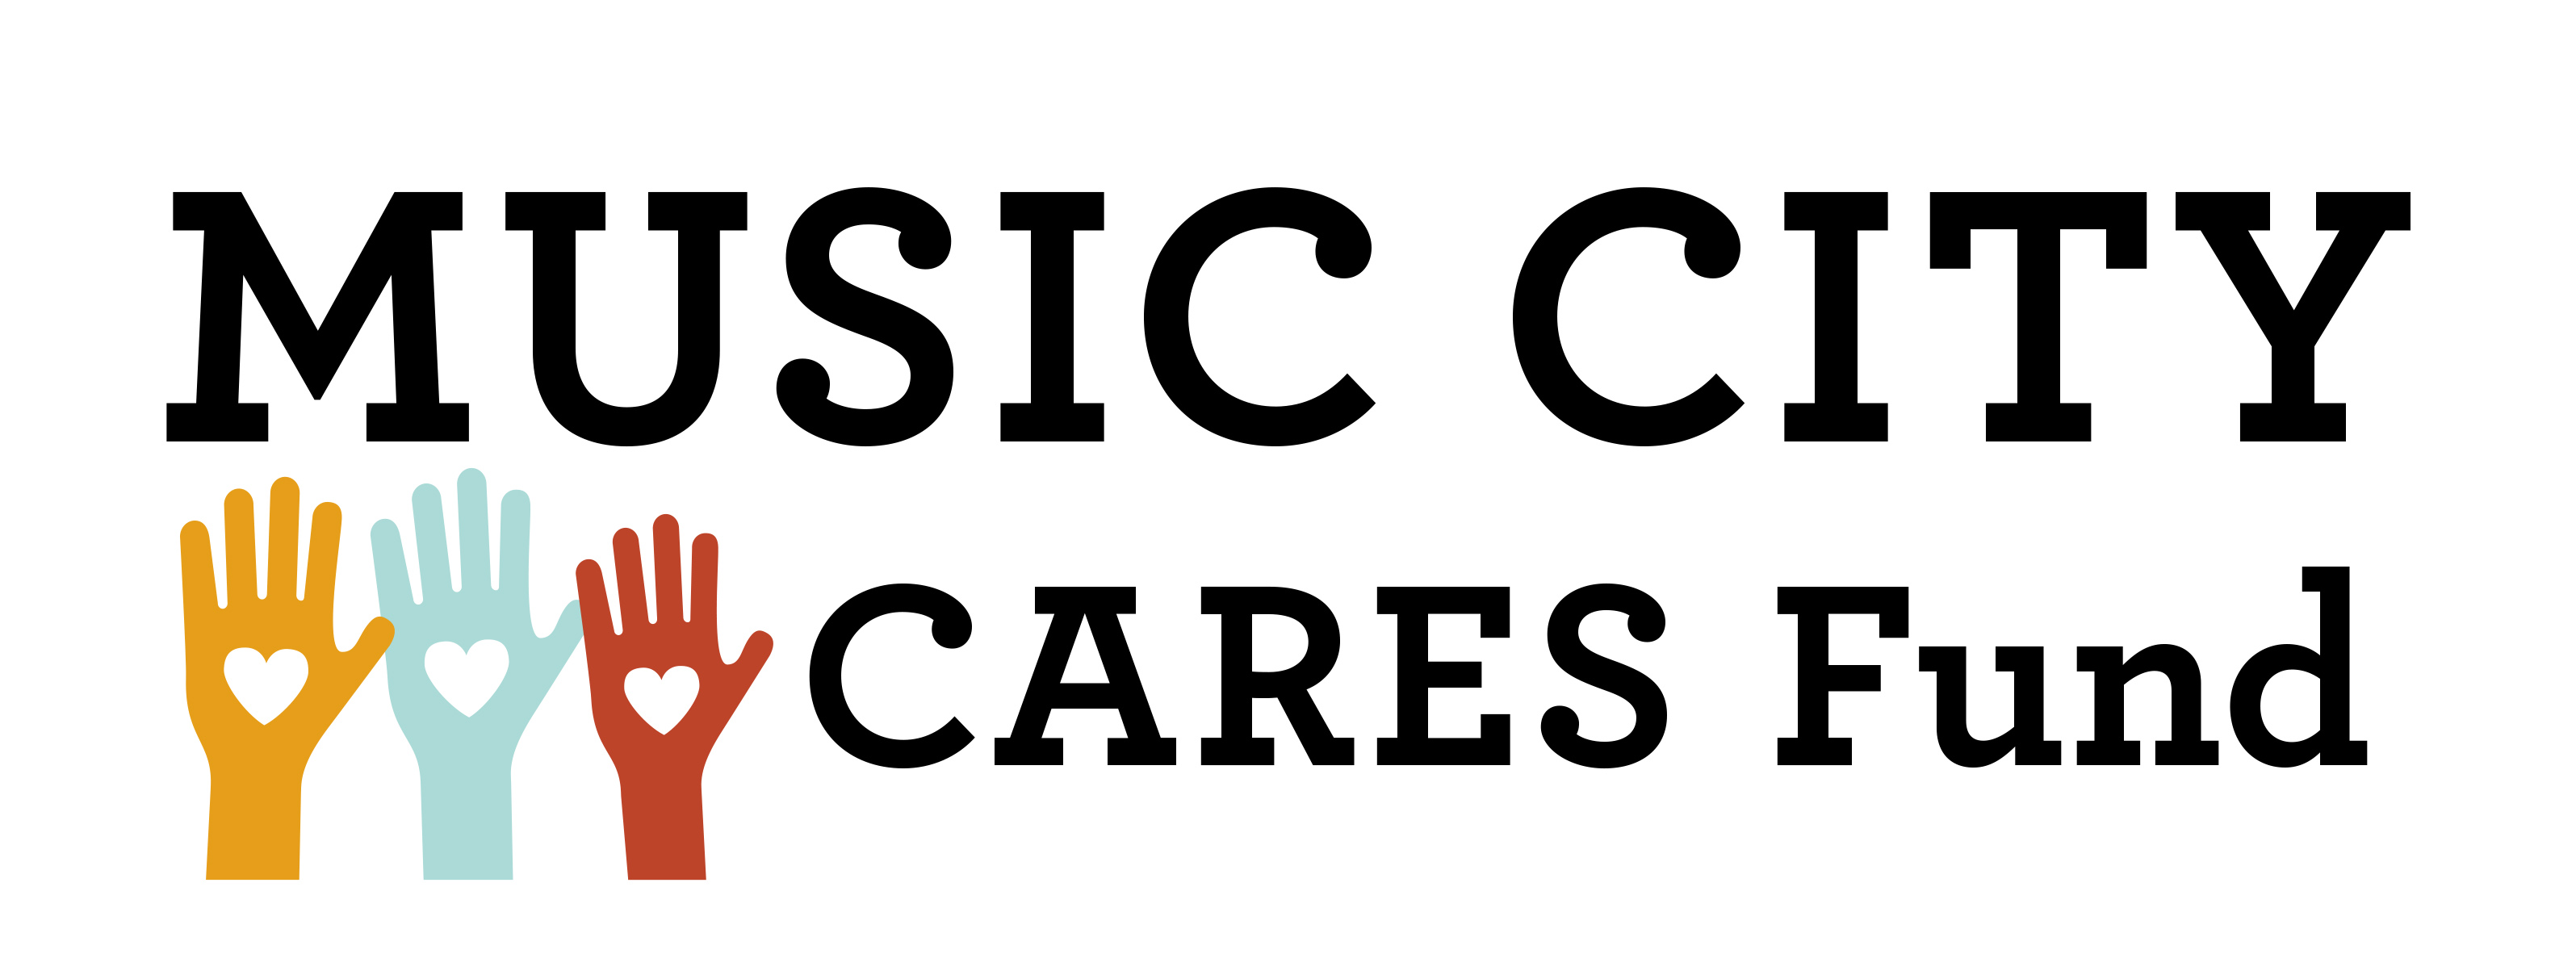 Nashville Music Cares Fund